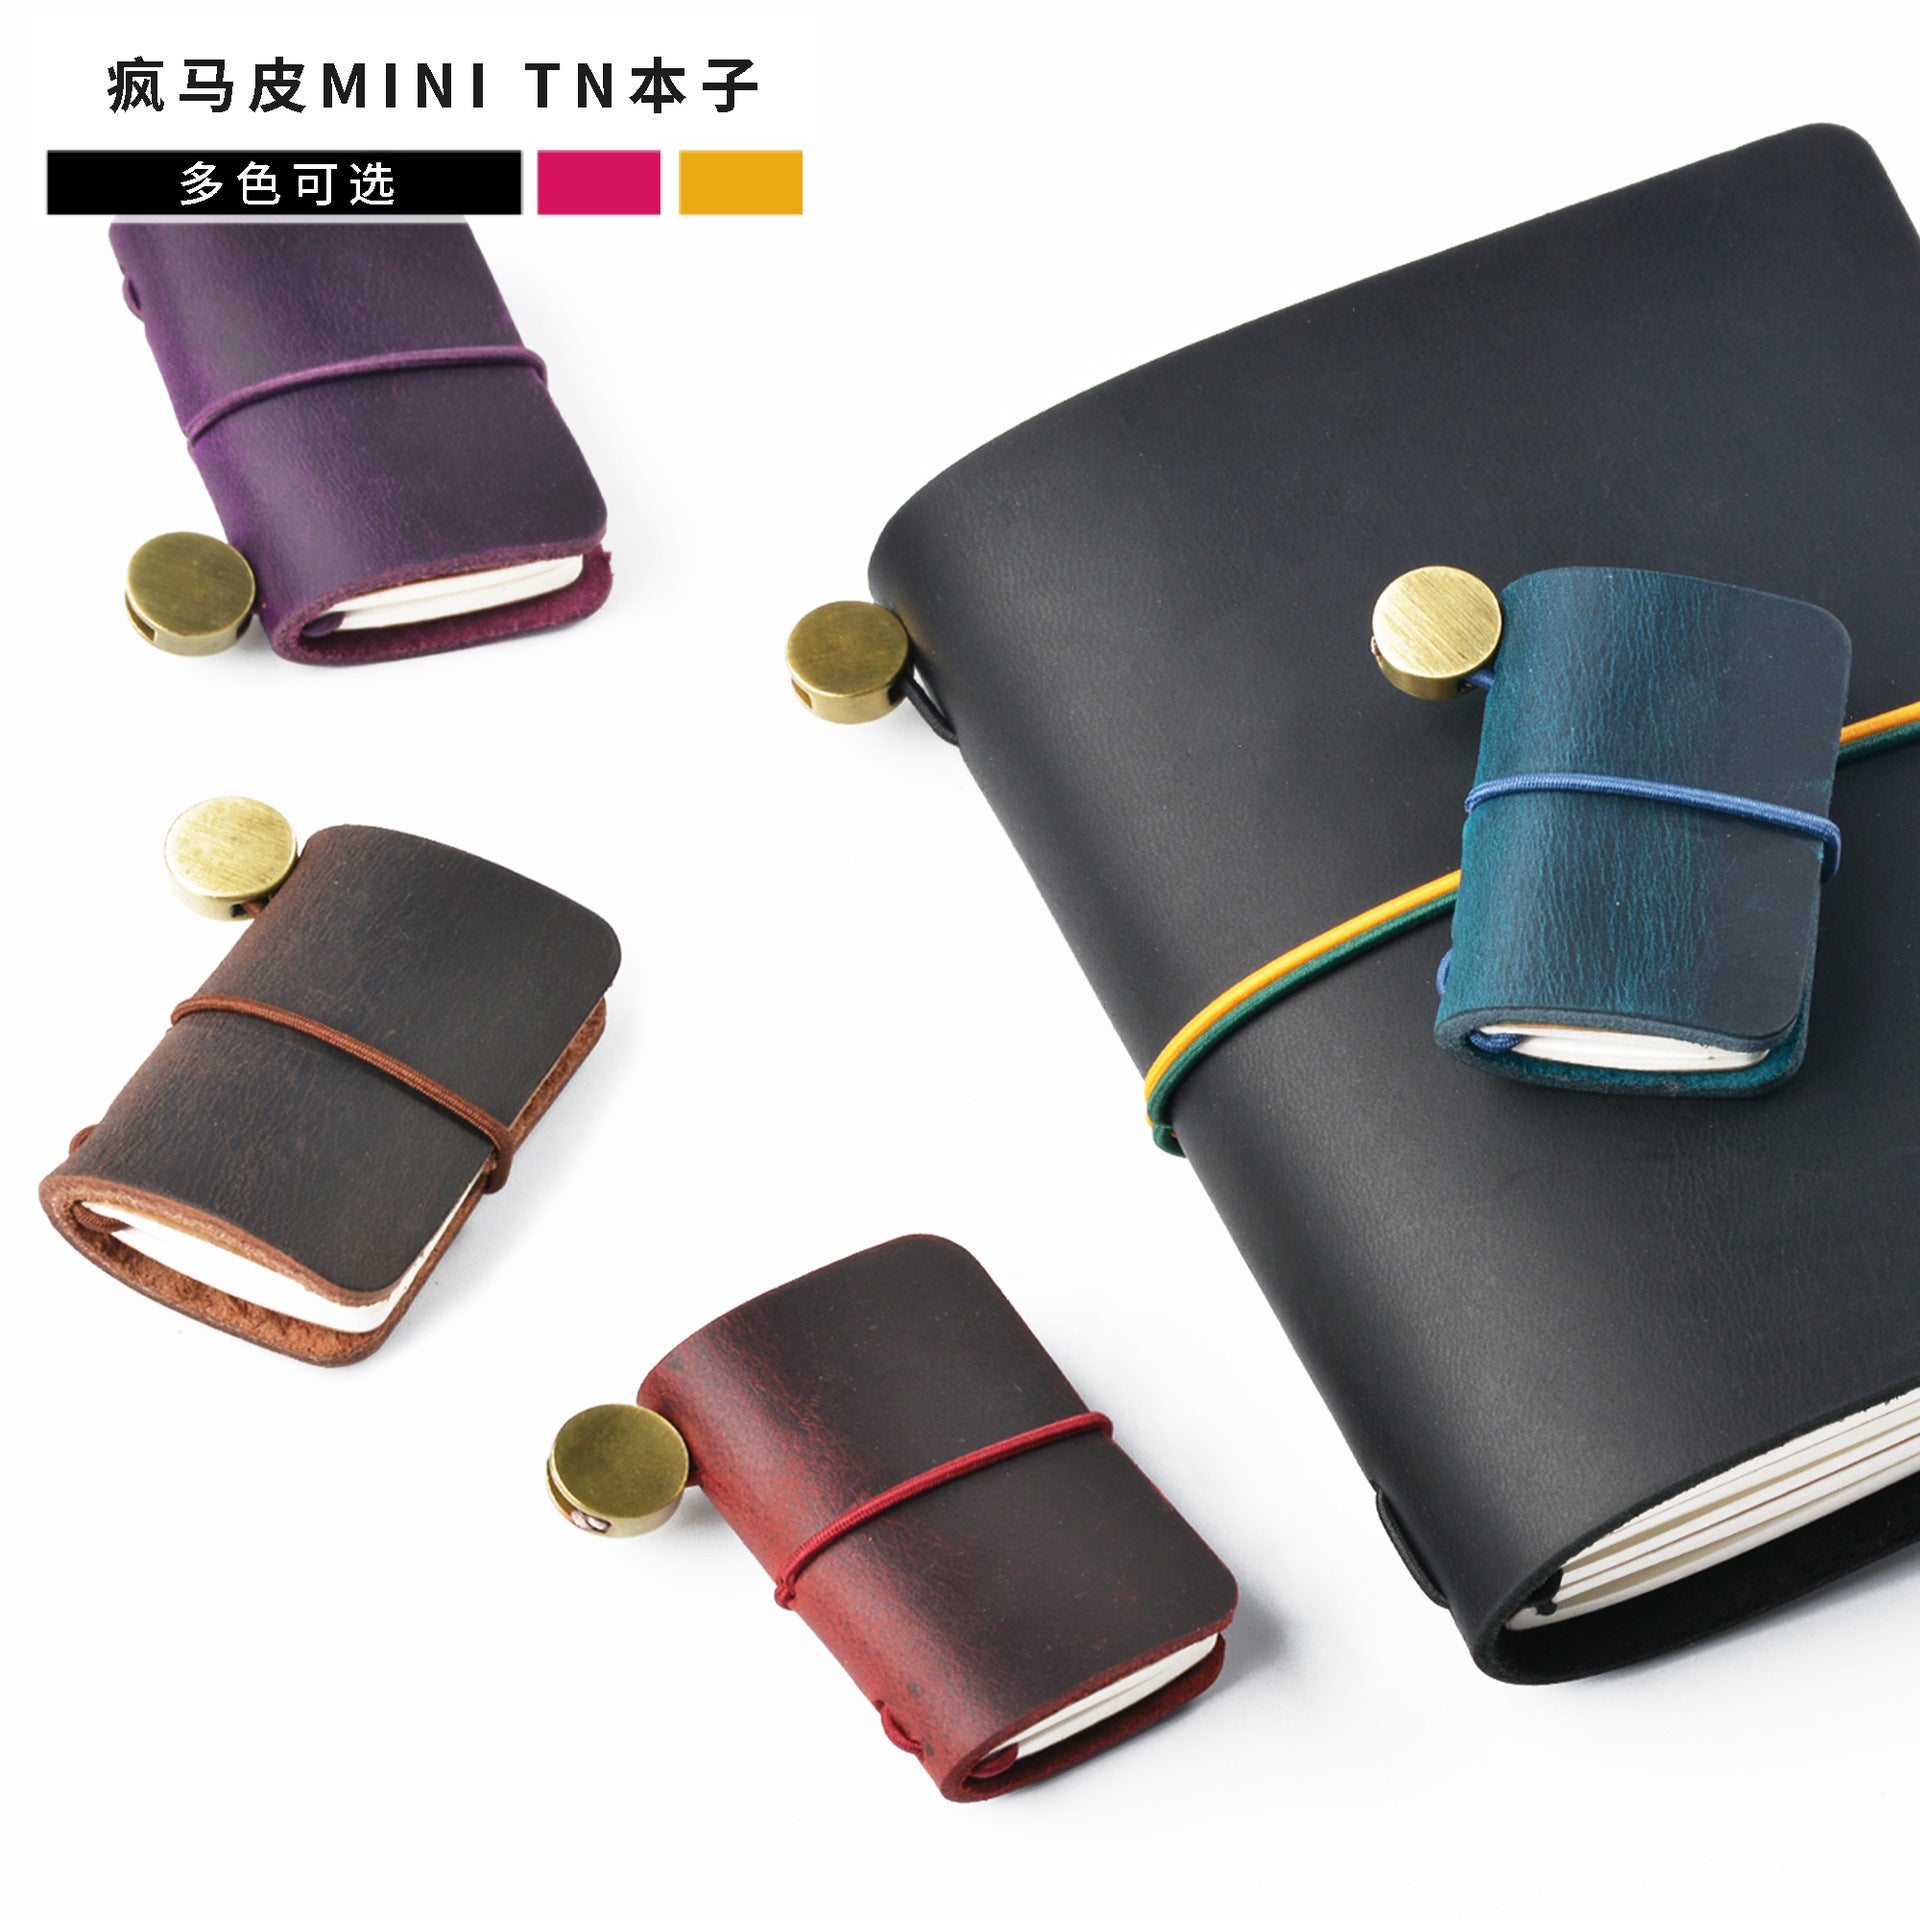 Traveler notebook Mini TN mini travel book pendant leather handmade leather hand account decoration accessories - MentorG Store